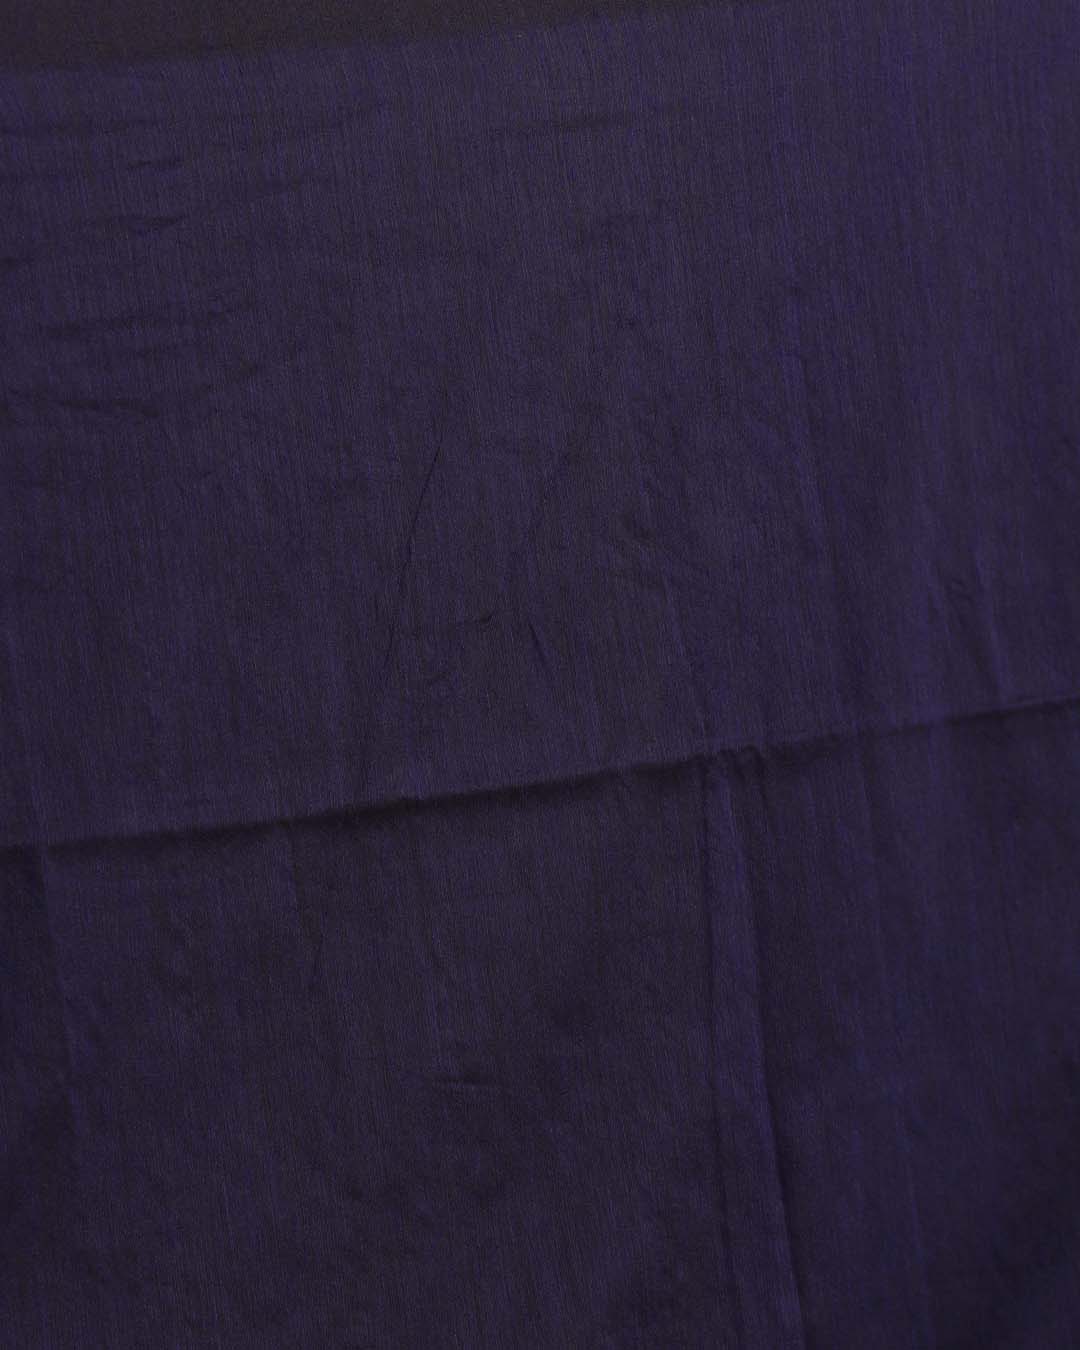 Indethnic Blue Cotton Blend Solid Design Sarees - Saree Detail View